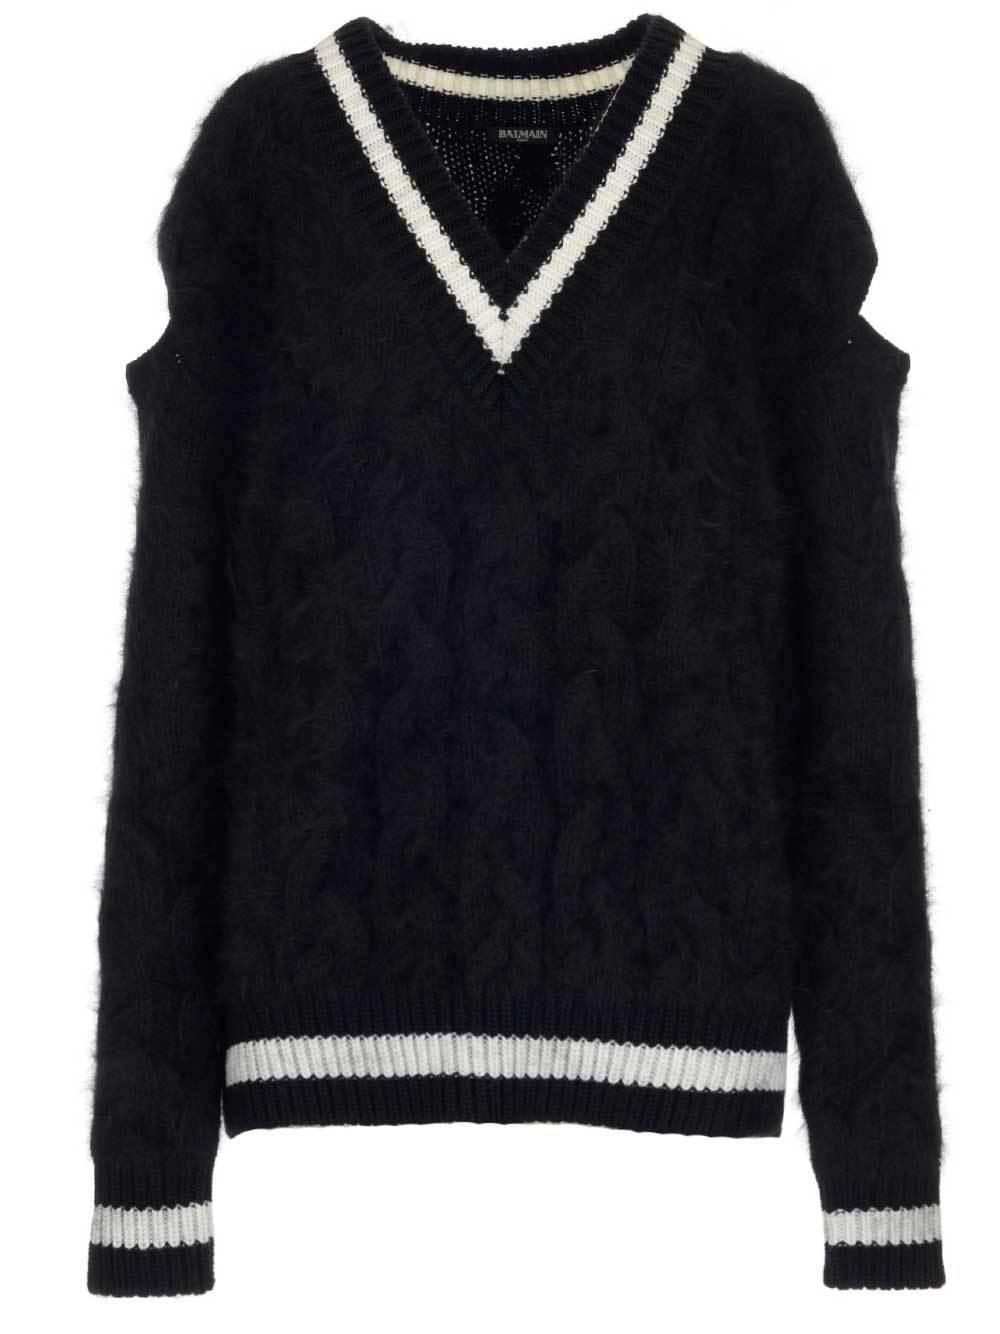 Balmain Wool V Neck Chunky Cable Knit Sweatshirt in Black - Lyst